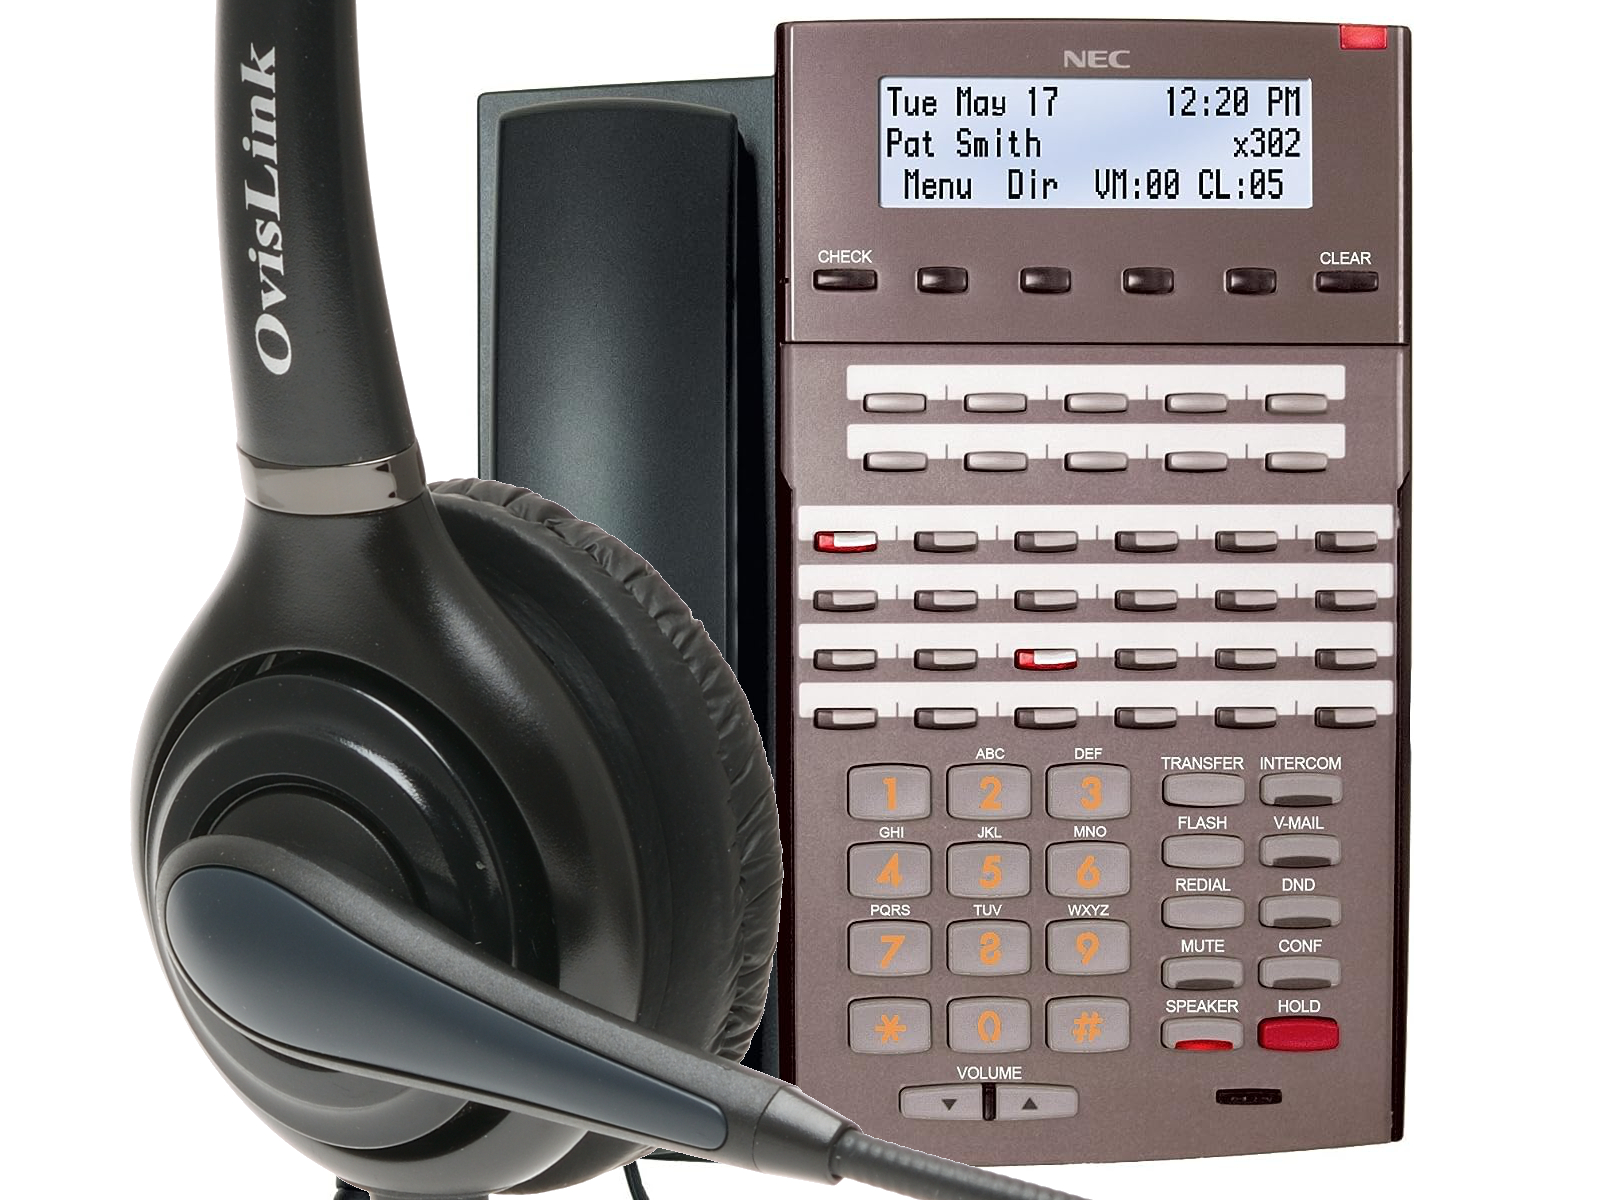 Setup OvisLink headset with NEC DSX phone